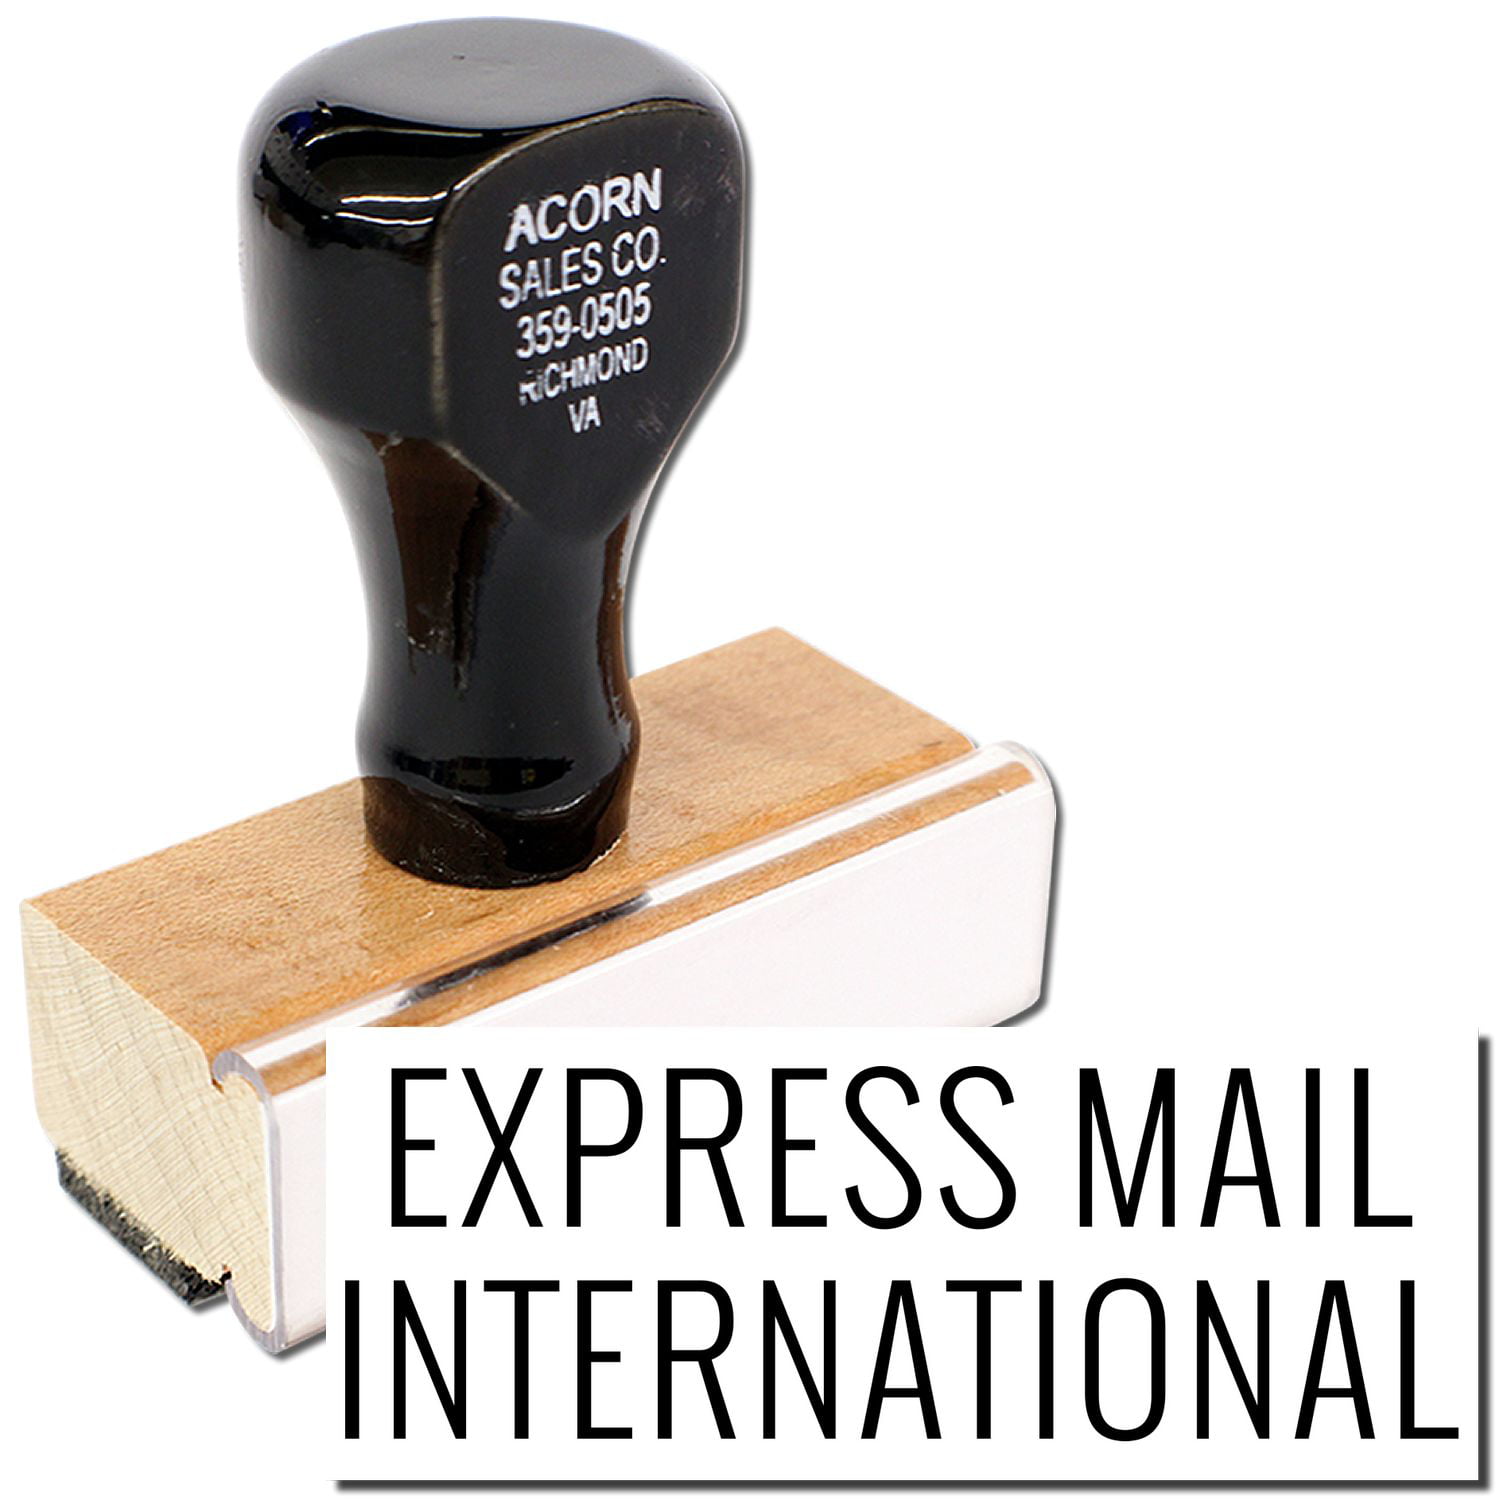 Spreek uit Opwekking Onafhankelijk Large Express Mail International Rubber Stamp, Wooden Handle Rubber Stamp,  Laser Engraved Dies, Impression Size 7/8" tall x 2-1/4”, Uses a Separate  Stamp Pad - Walmart.com